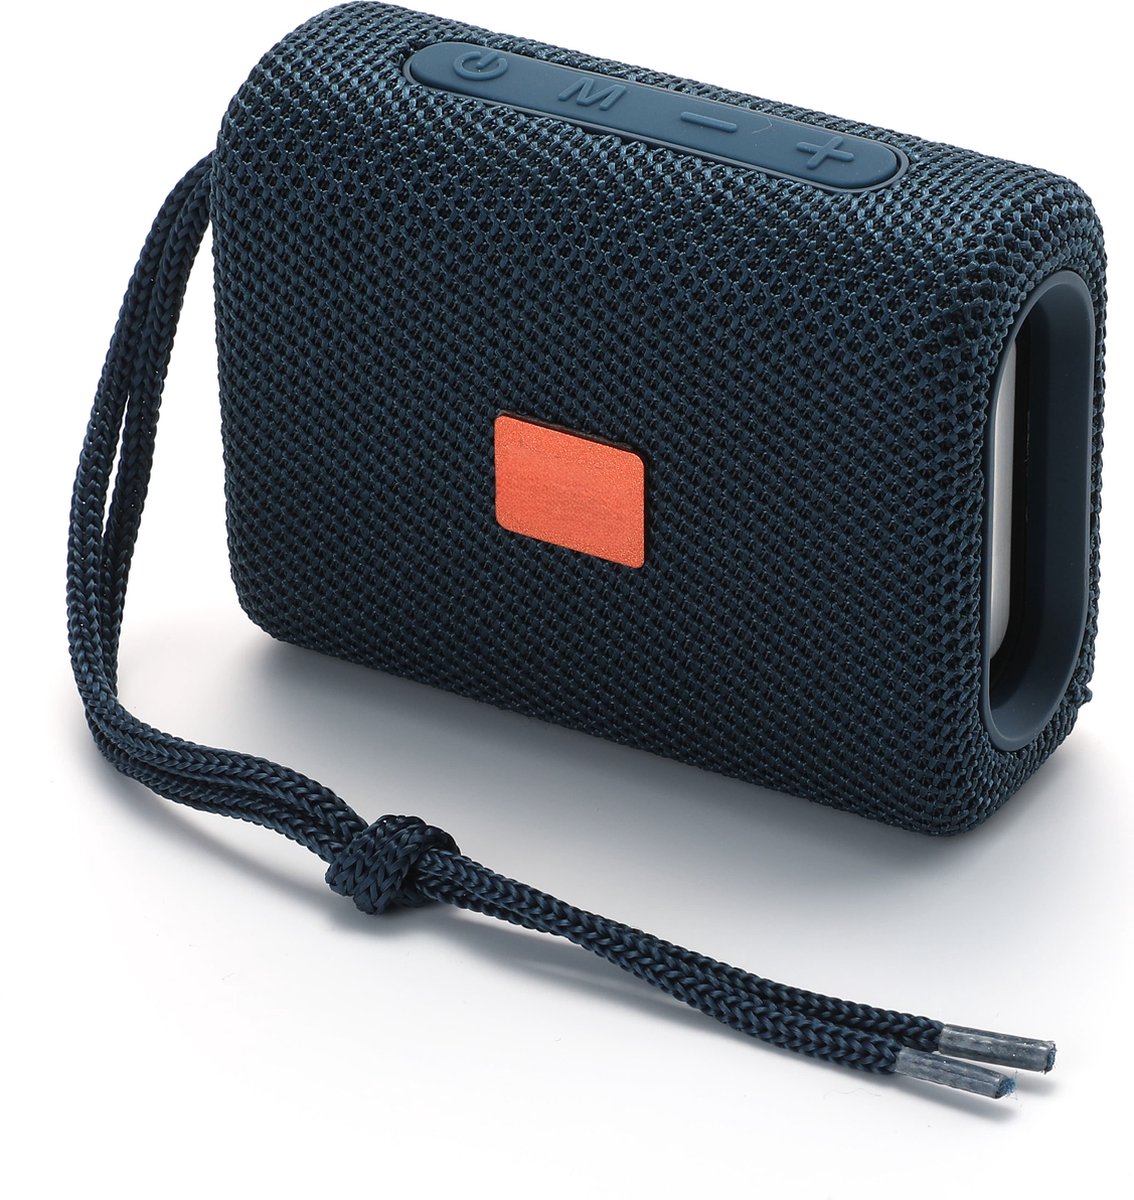 Phreeze Clip On Bluetooth Speaker - Draadloze Speaker Klein - IPX 4 Waterdicht - Mini Smart Speaker - Blauw